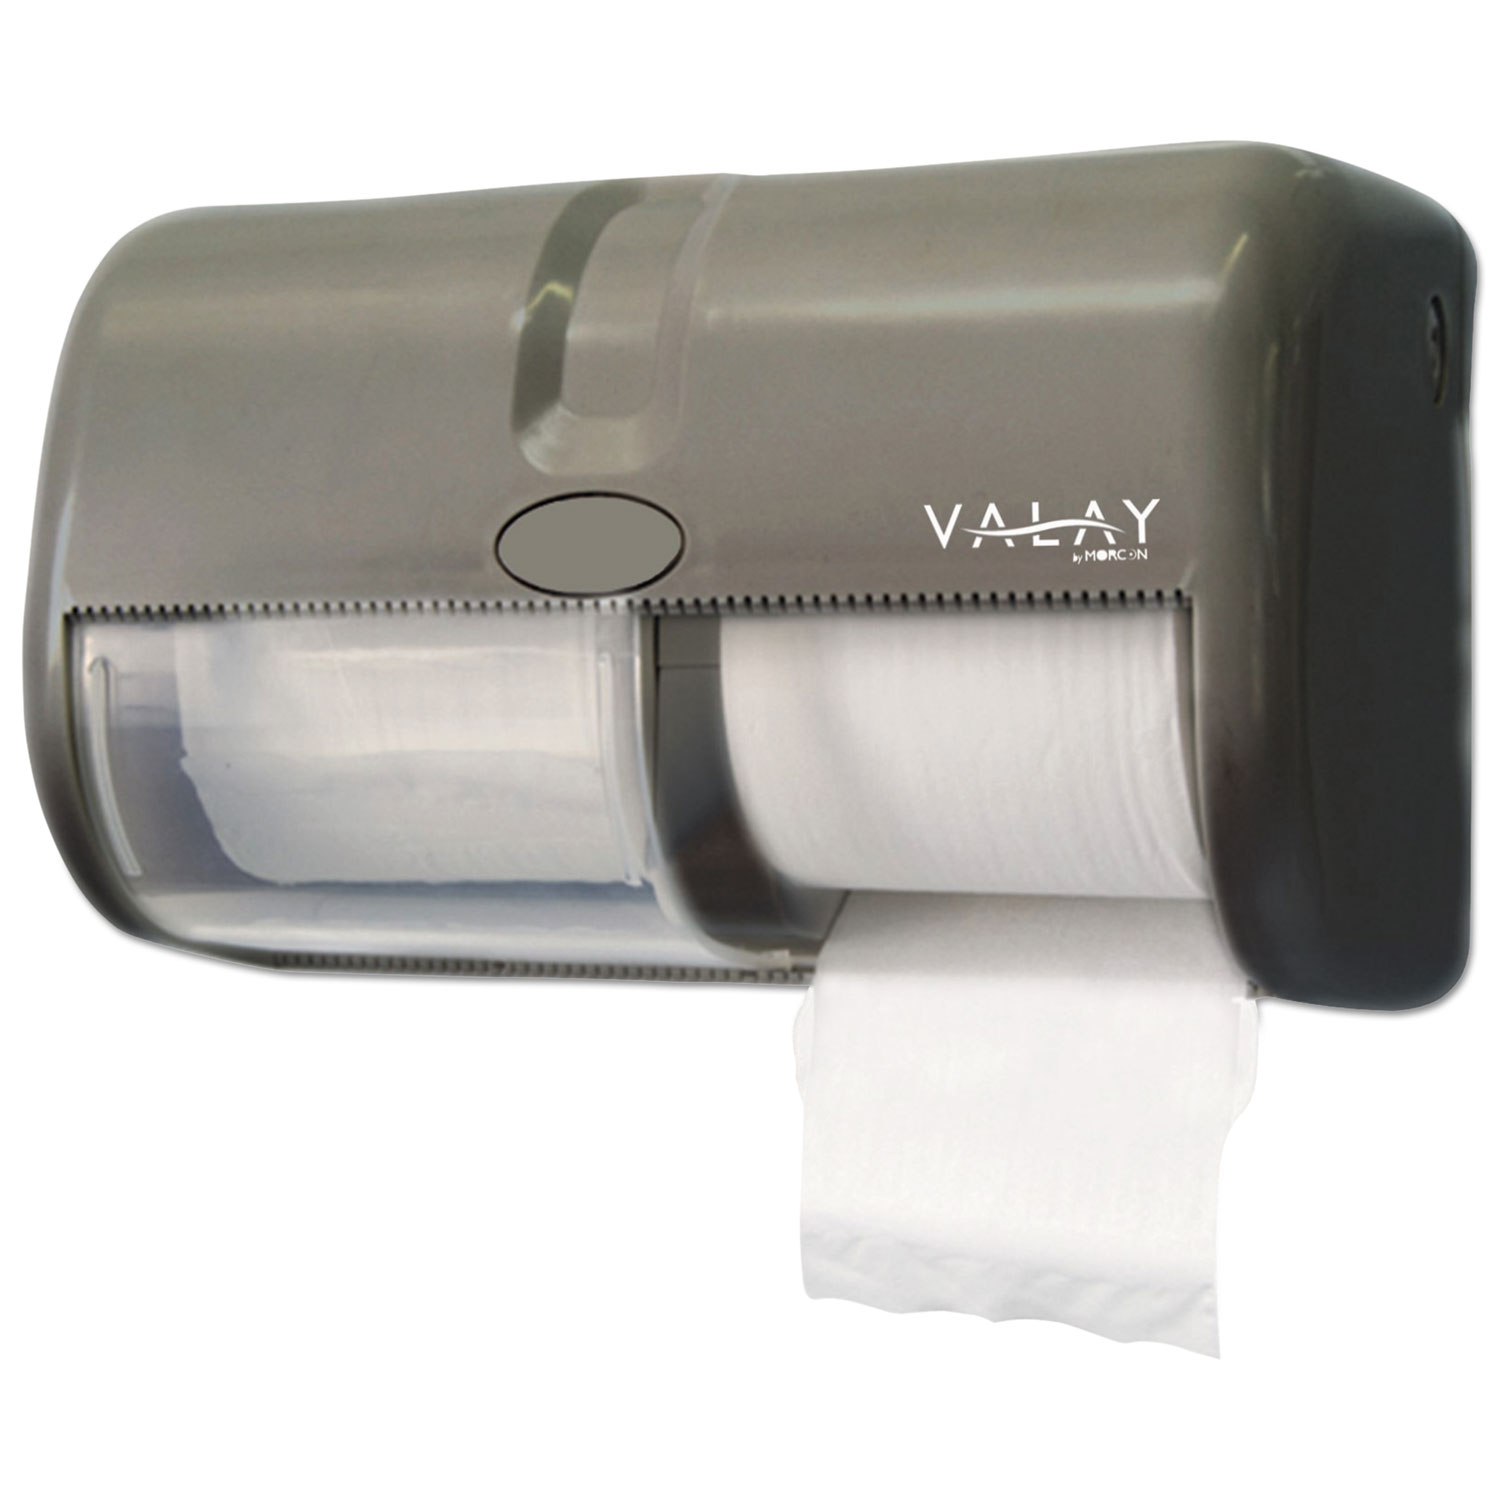 Valay Toilet Tissue Dispenser, 11.5